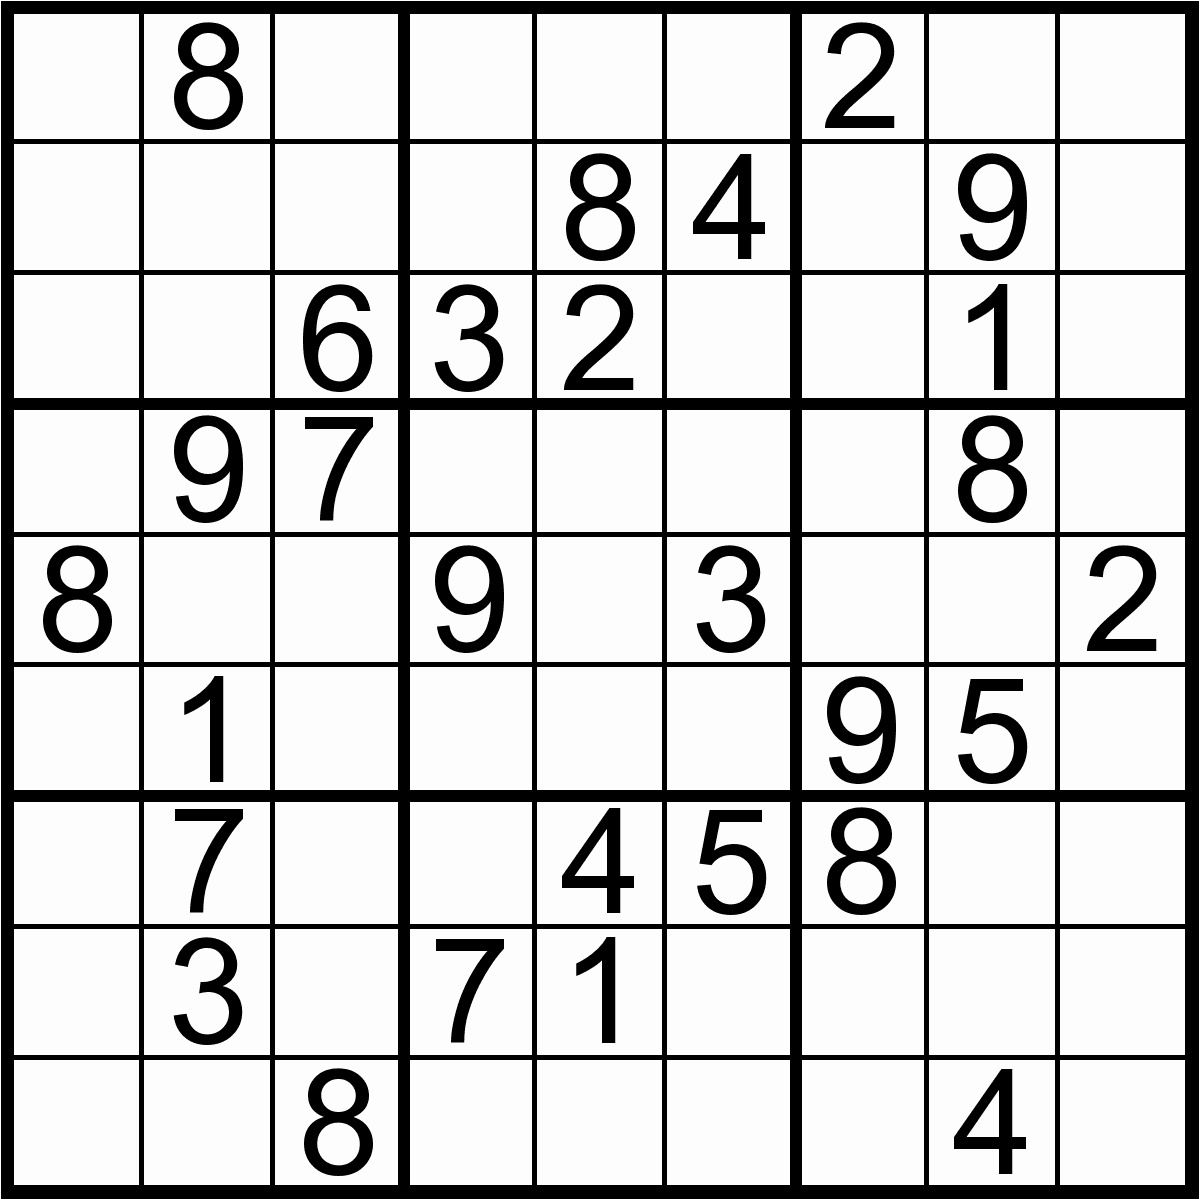 Easy Sudoku Puzzles To Print Free Example Easy Sudoku For You - Free Printable Sudoku Pdf